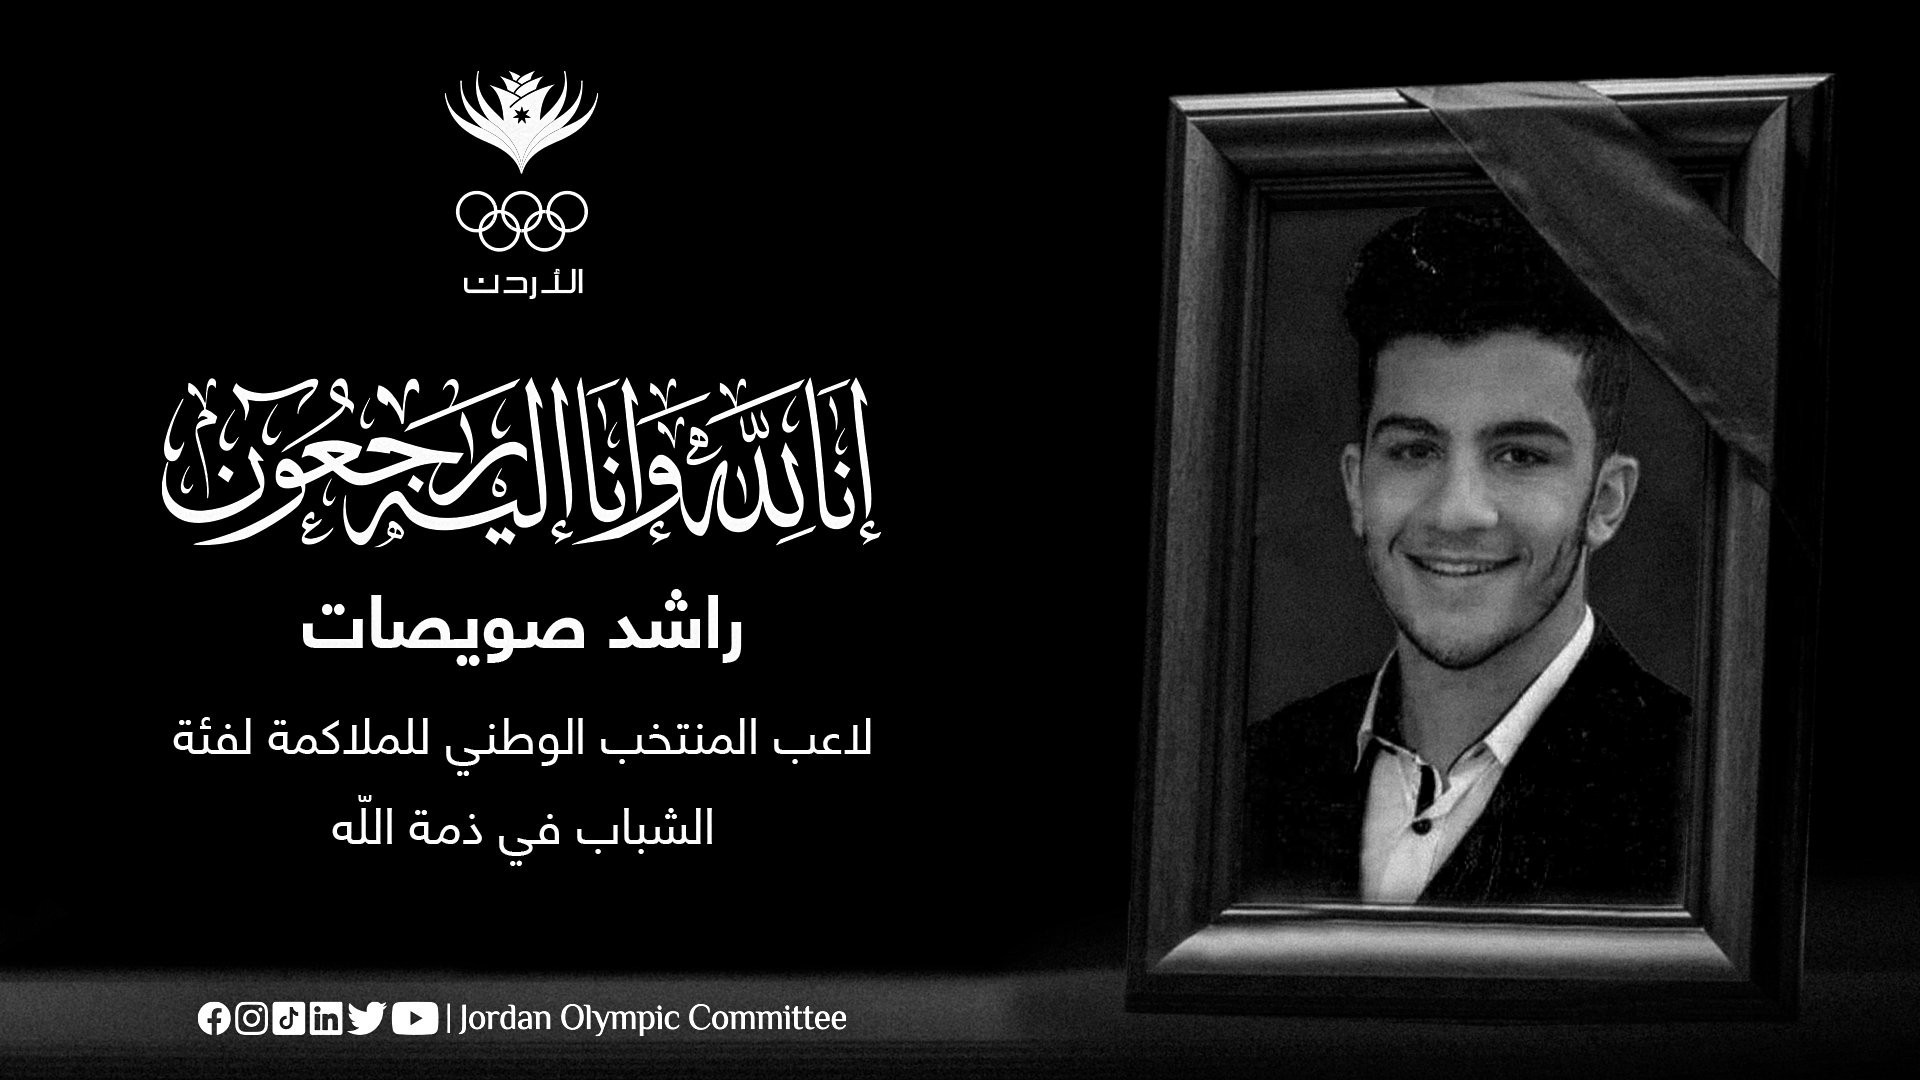 Jordan Olympic Committee seek further information over Al-Swaisat death